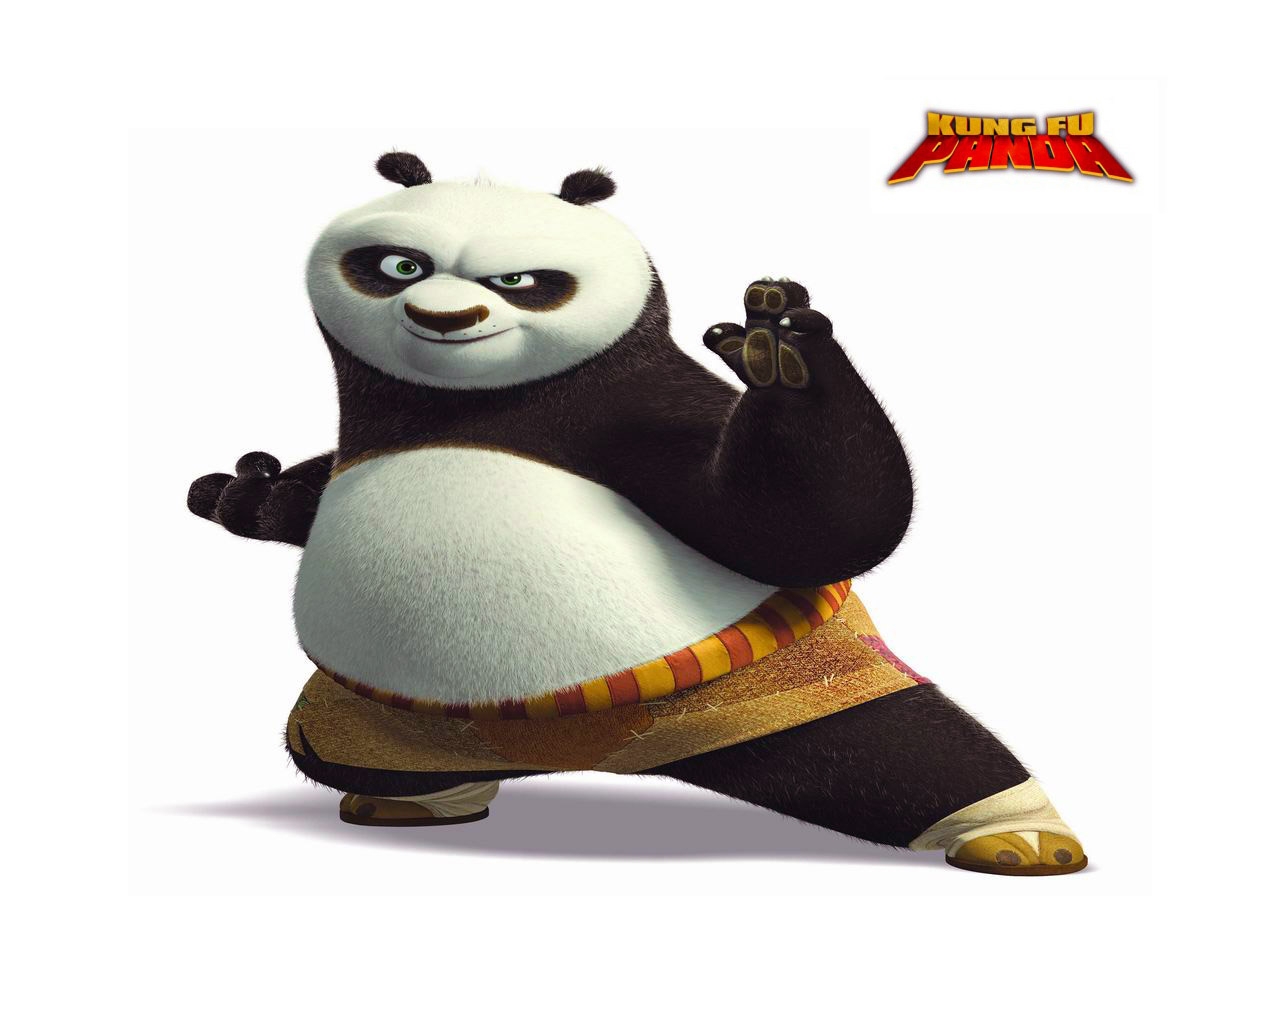 Kung Fu Panda - Kung Fu Panda Action - 1280x1024 Wallpaper - teahub.io